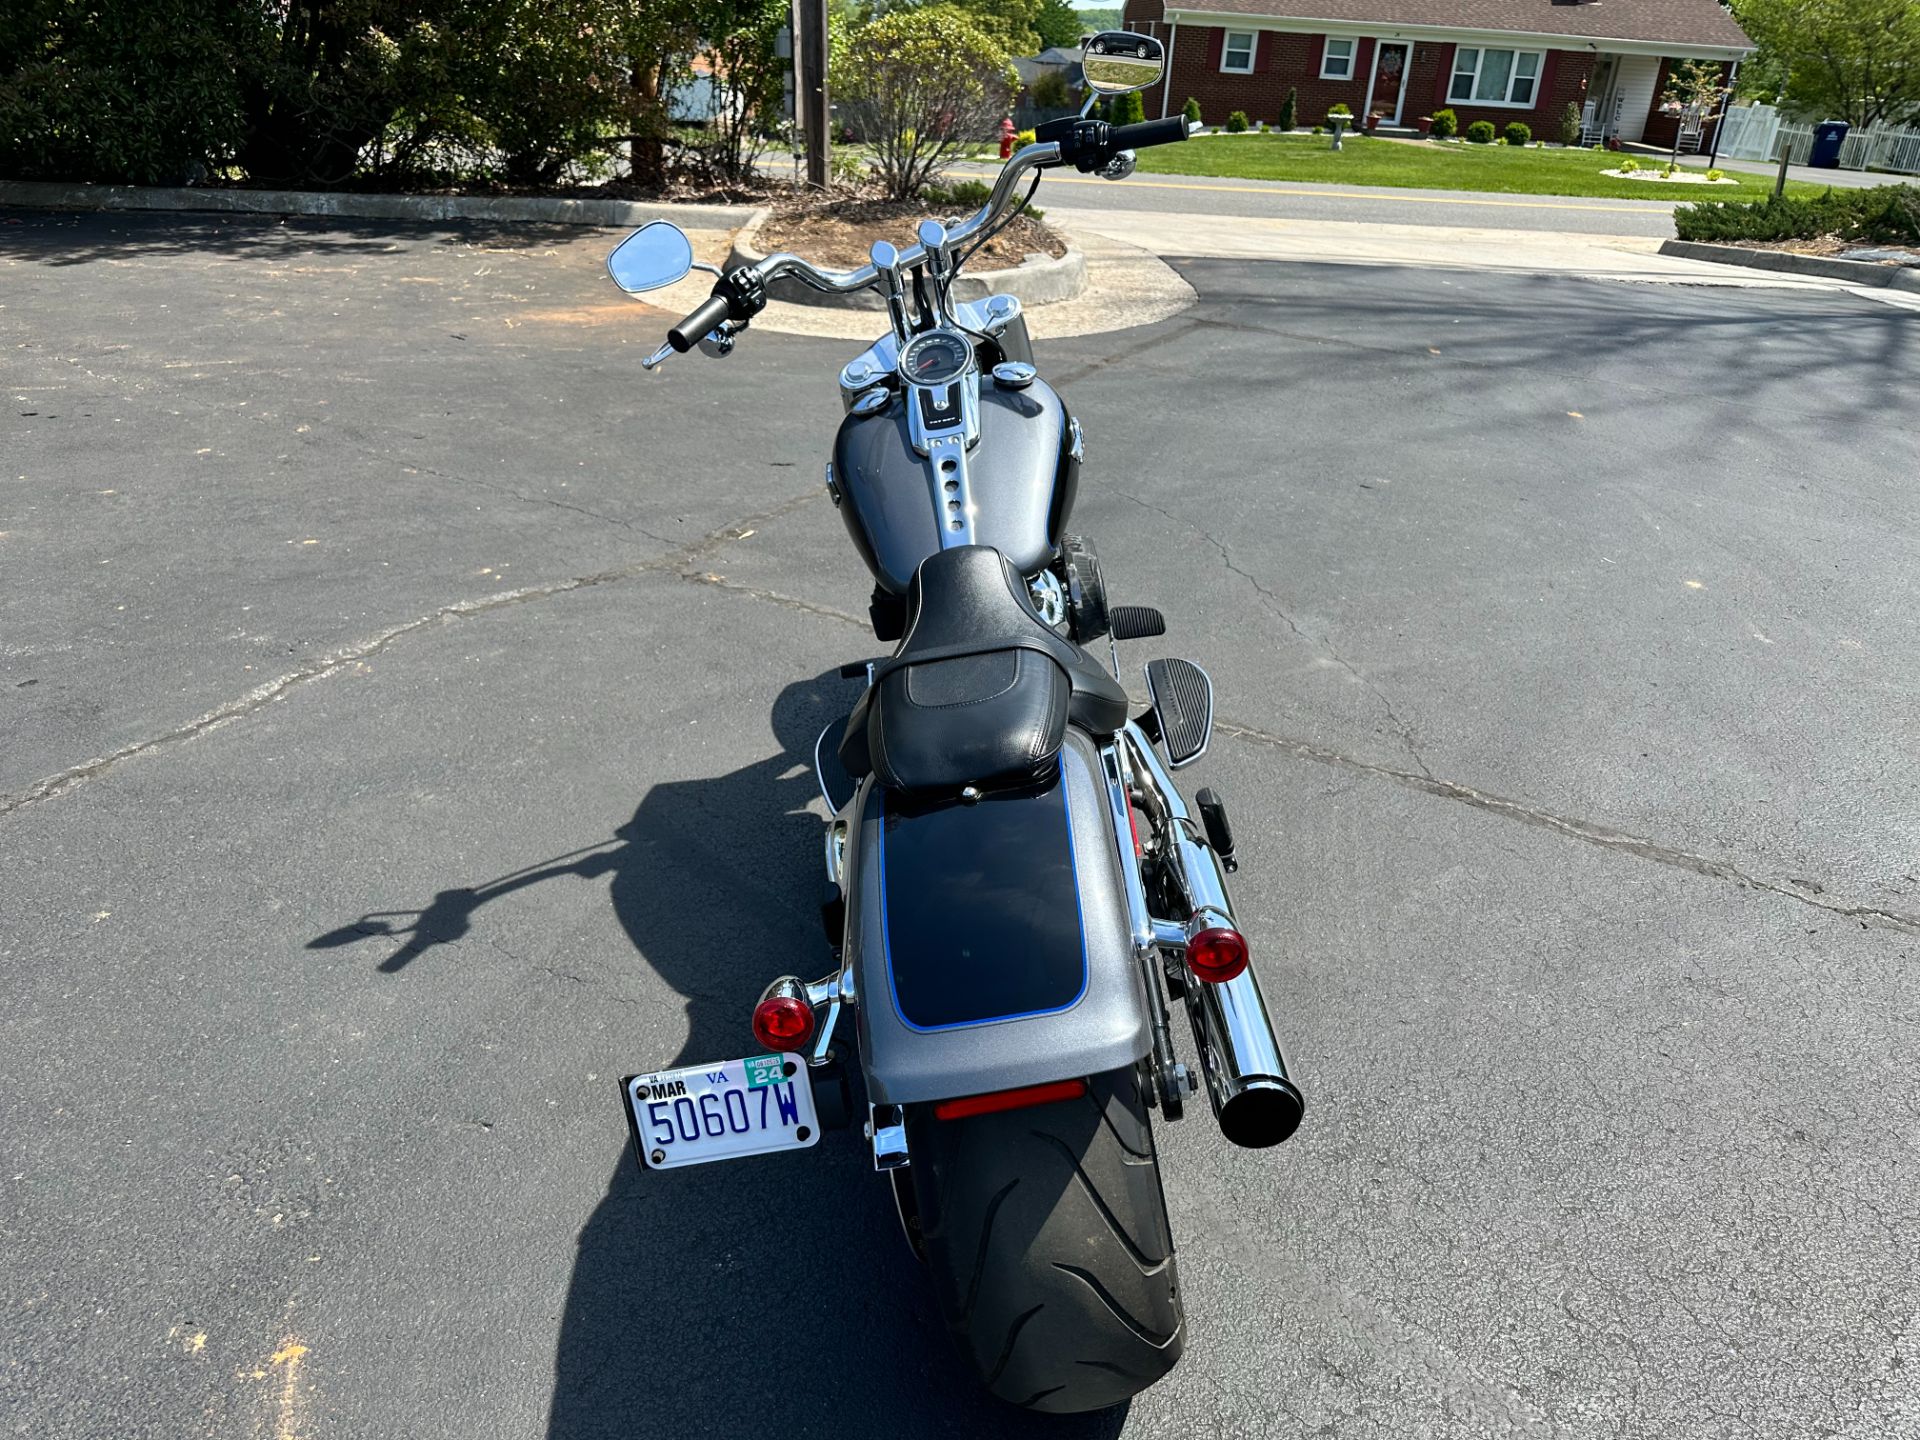 2021 Harley-Davidson Fat Boy® 114 in Lynchburg, Virginia - Photo 6